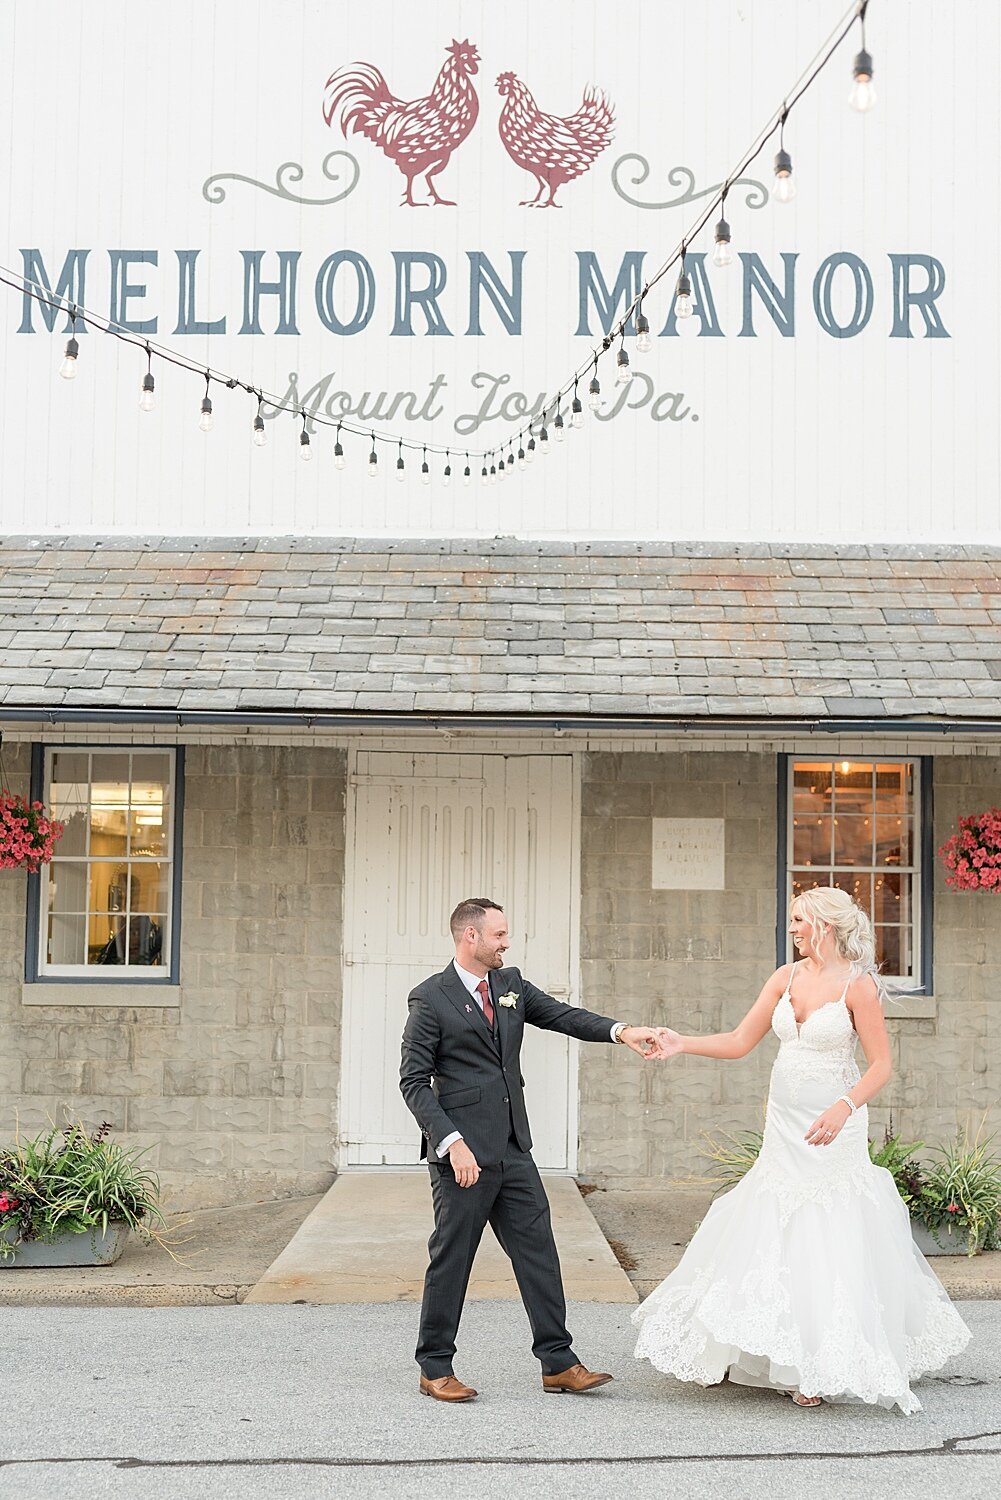 Melhorn Manor Mount Joy Barn Wedding Photography_7205.jpg